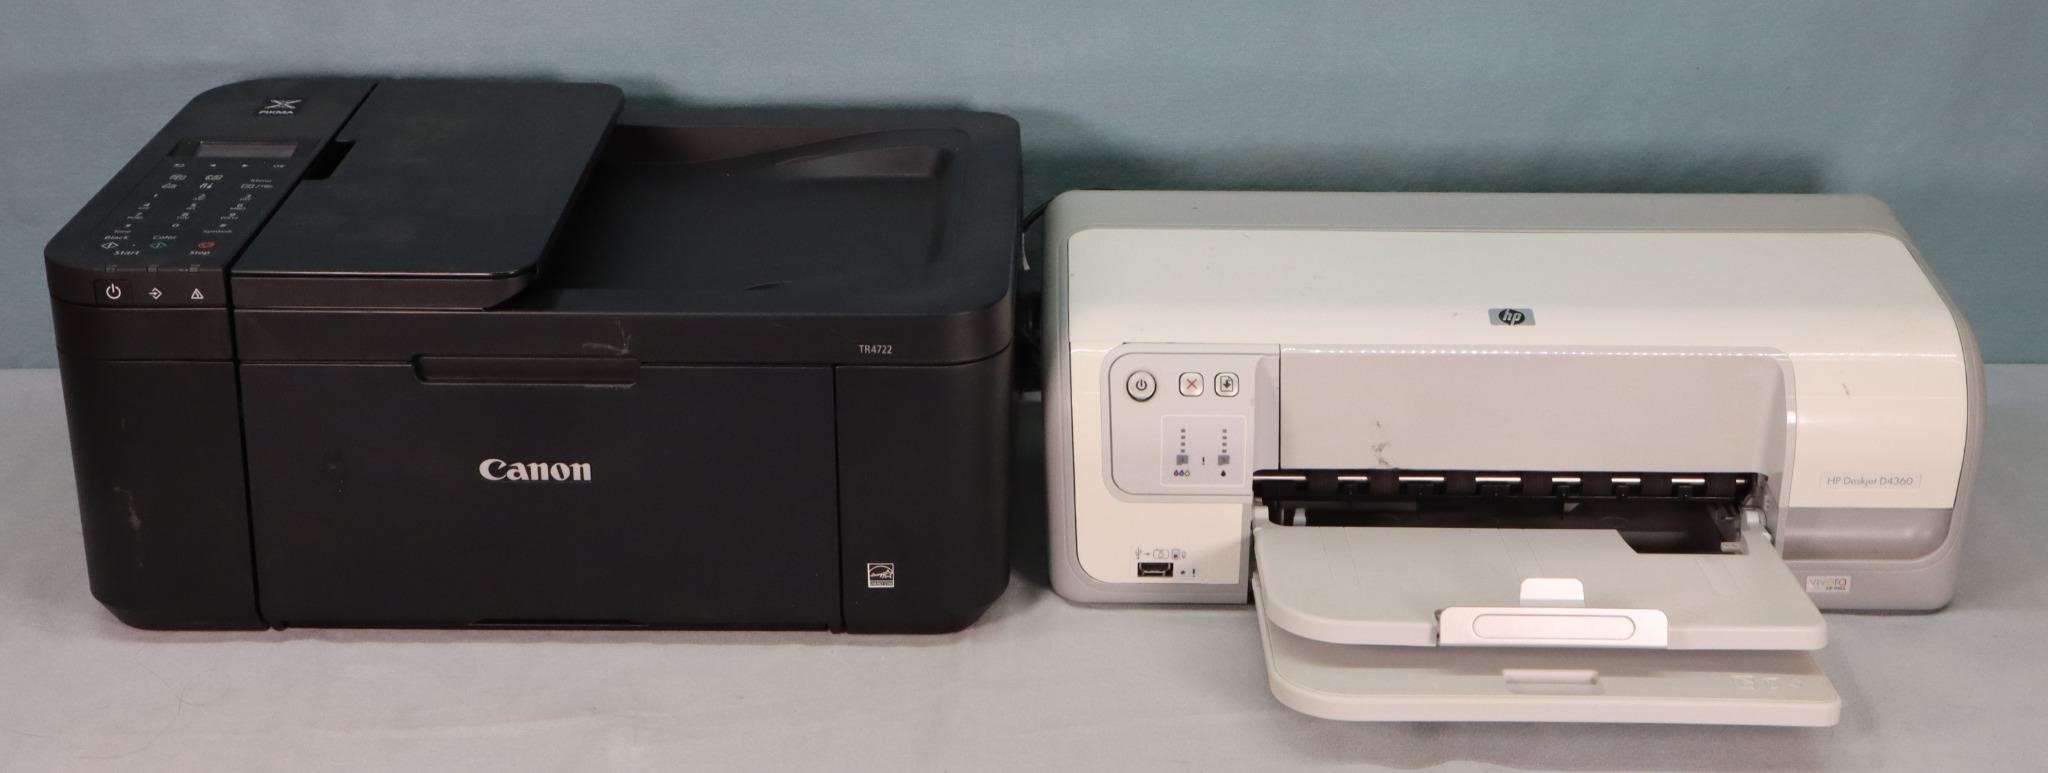 (2) Computer Printers